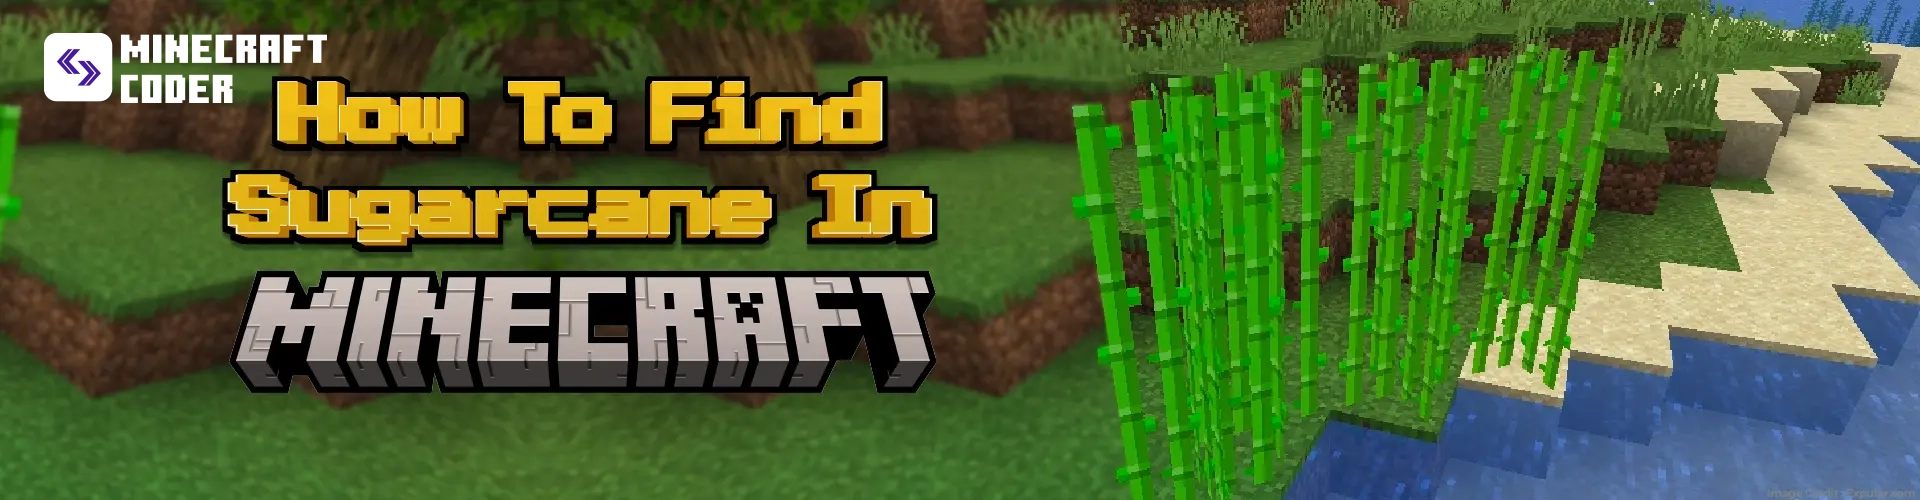 How to Find Sugar Cane in Minecraft